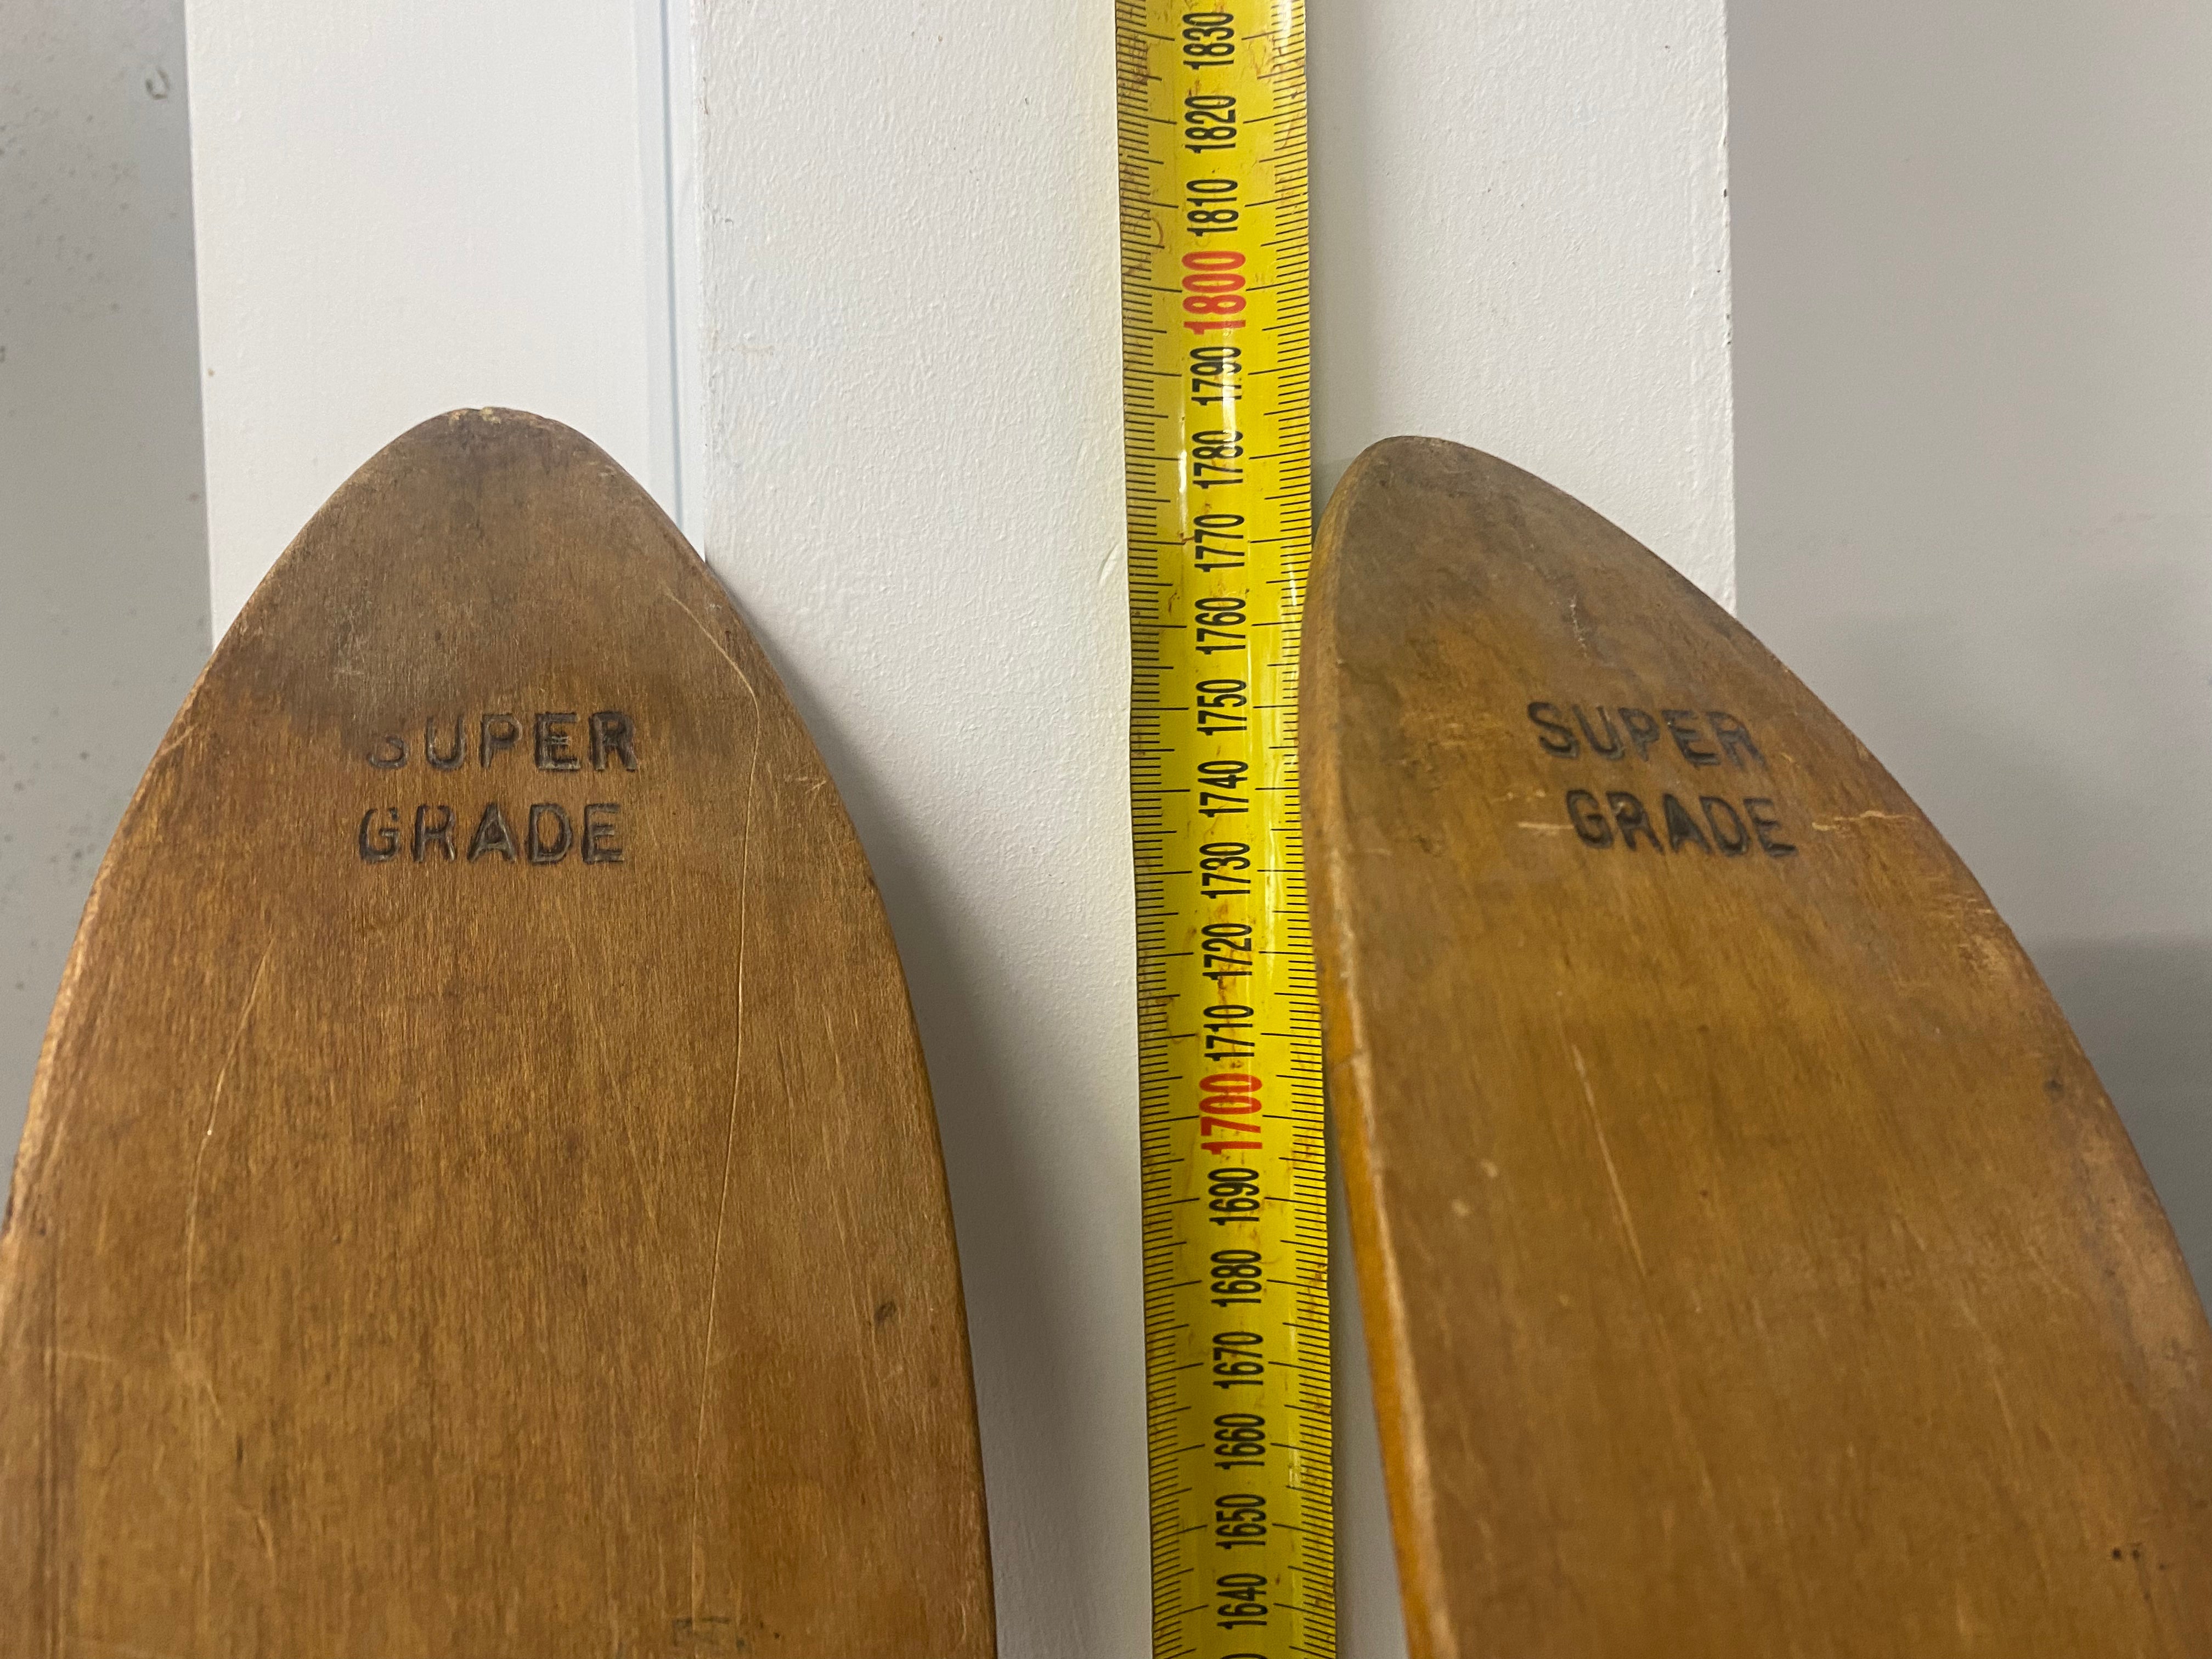 Peterborough Wooden Skis; ski tip bases with engravings stating "Super Grade"